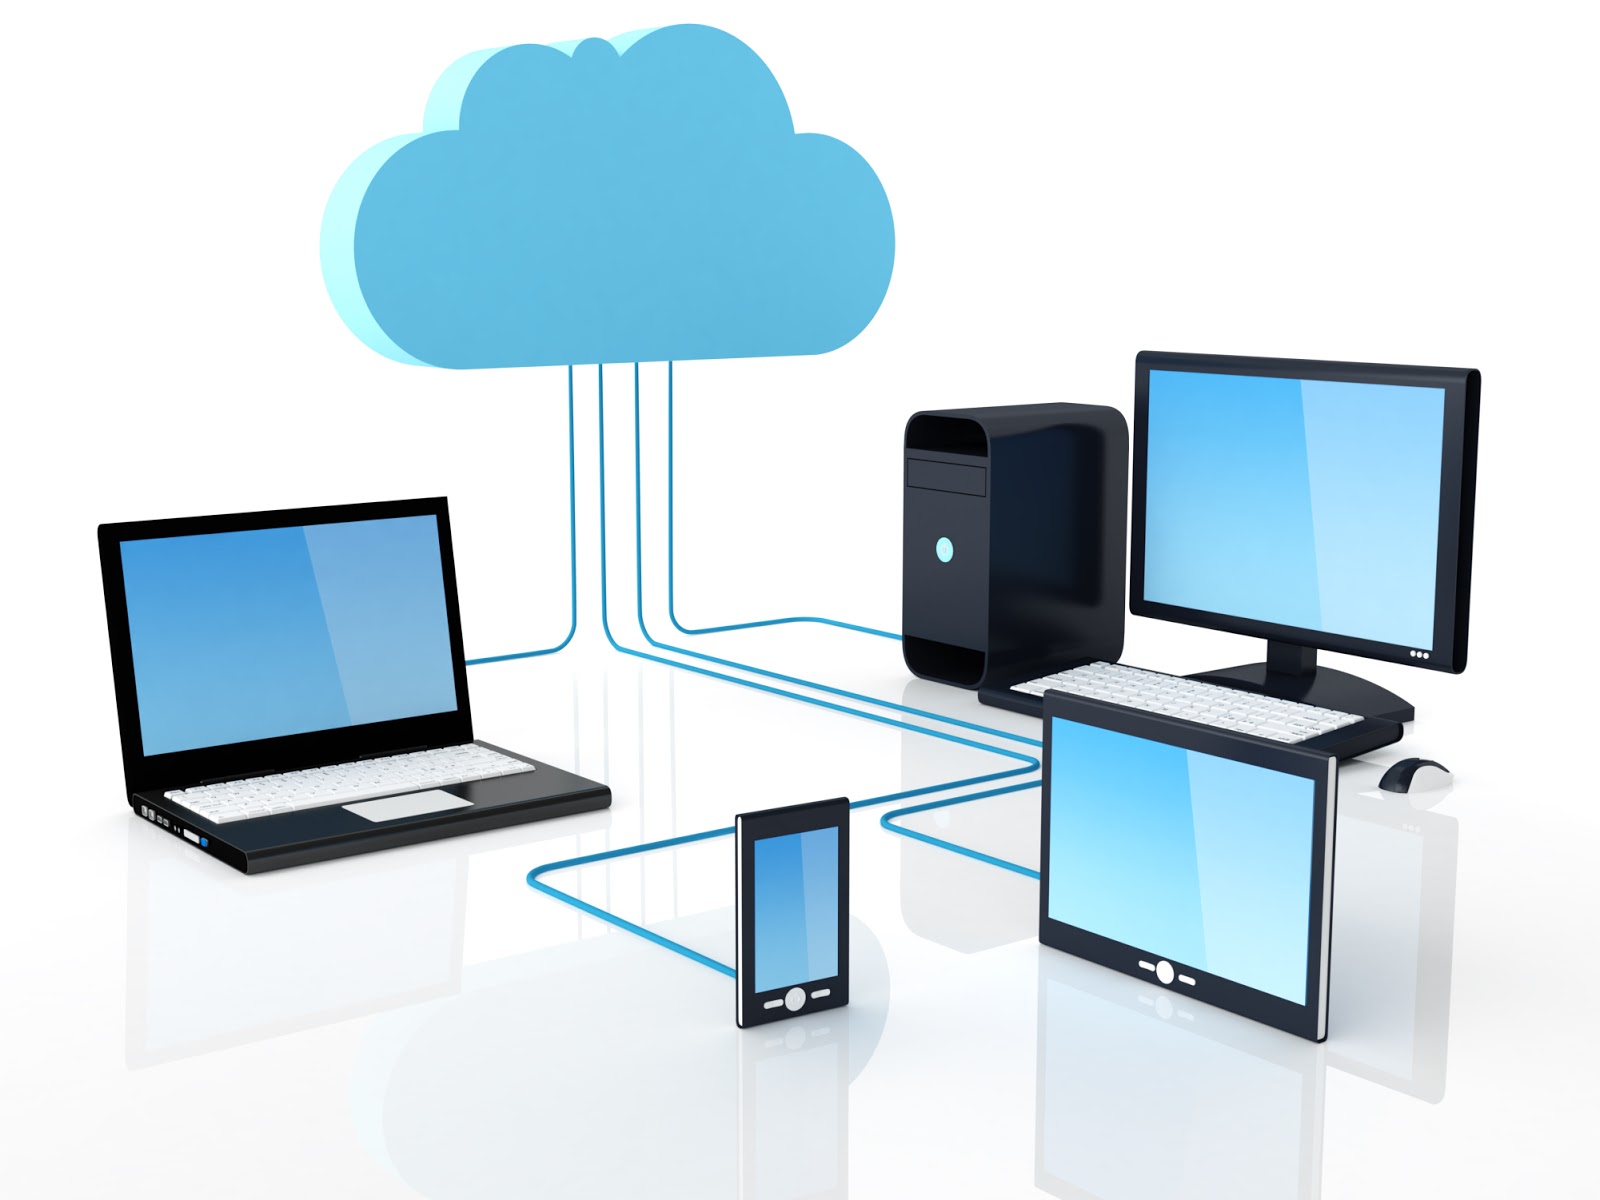 cloud computing - A Tech Walk With HRK